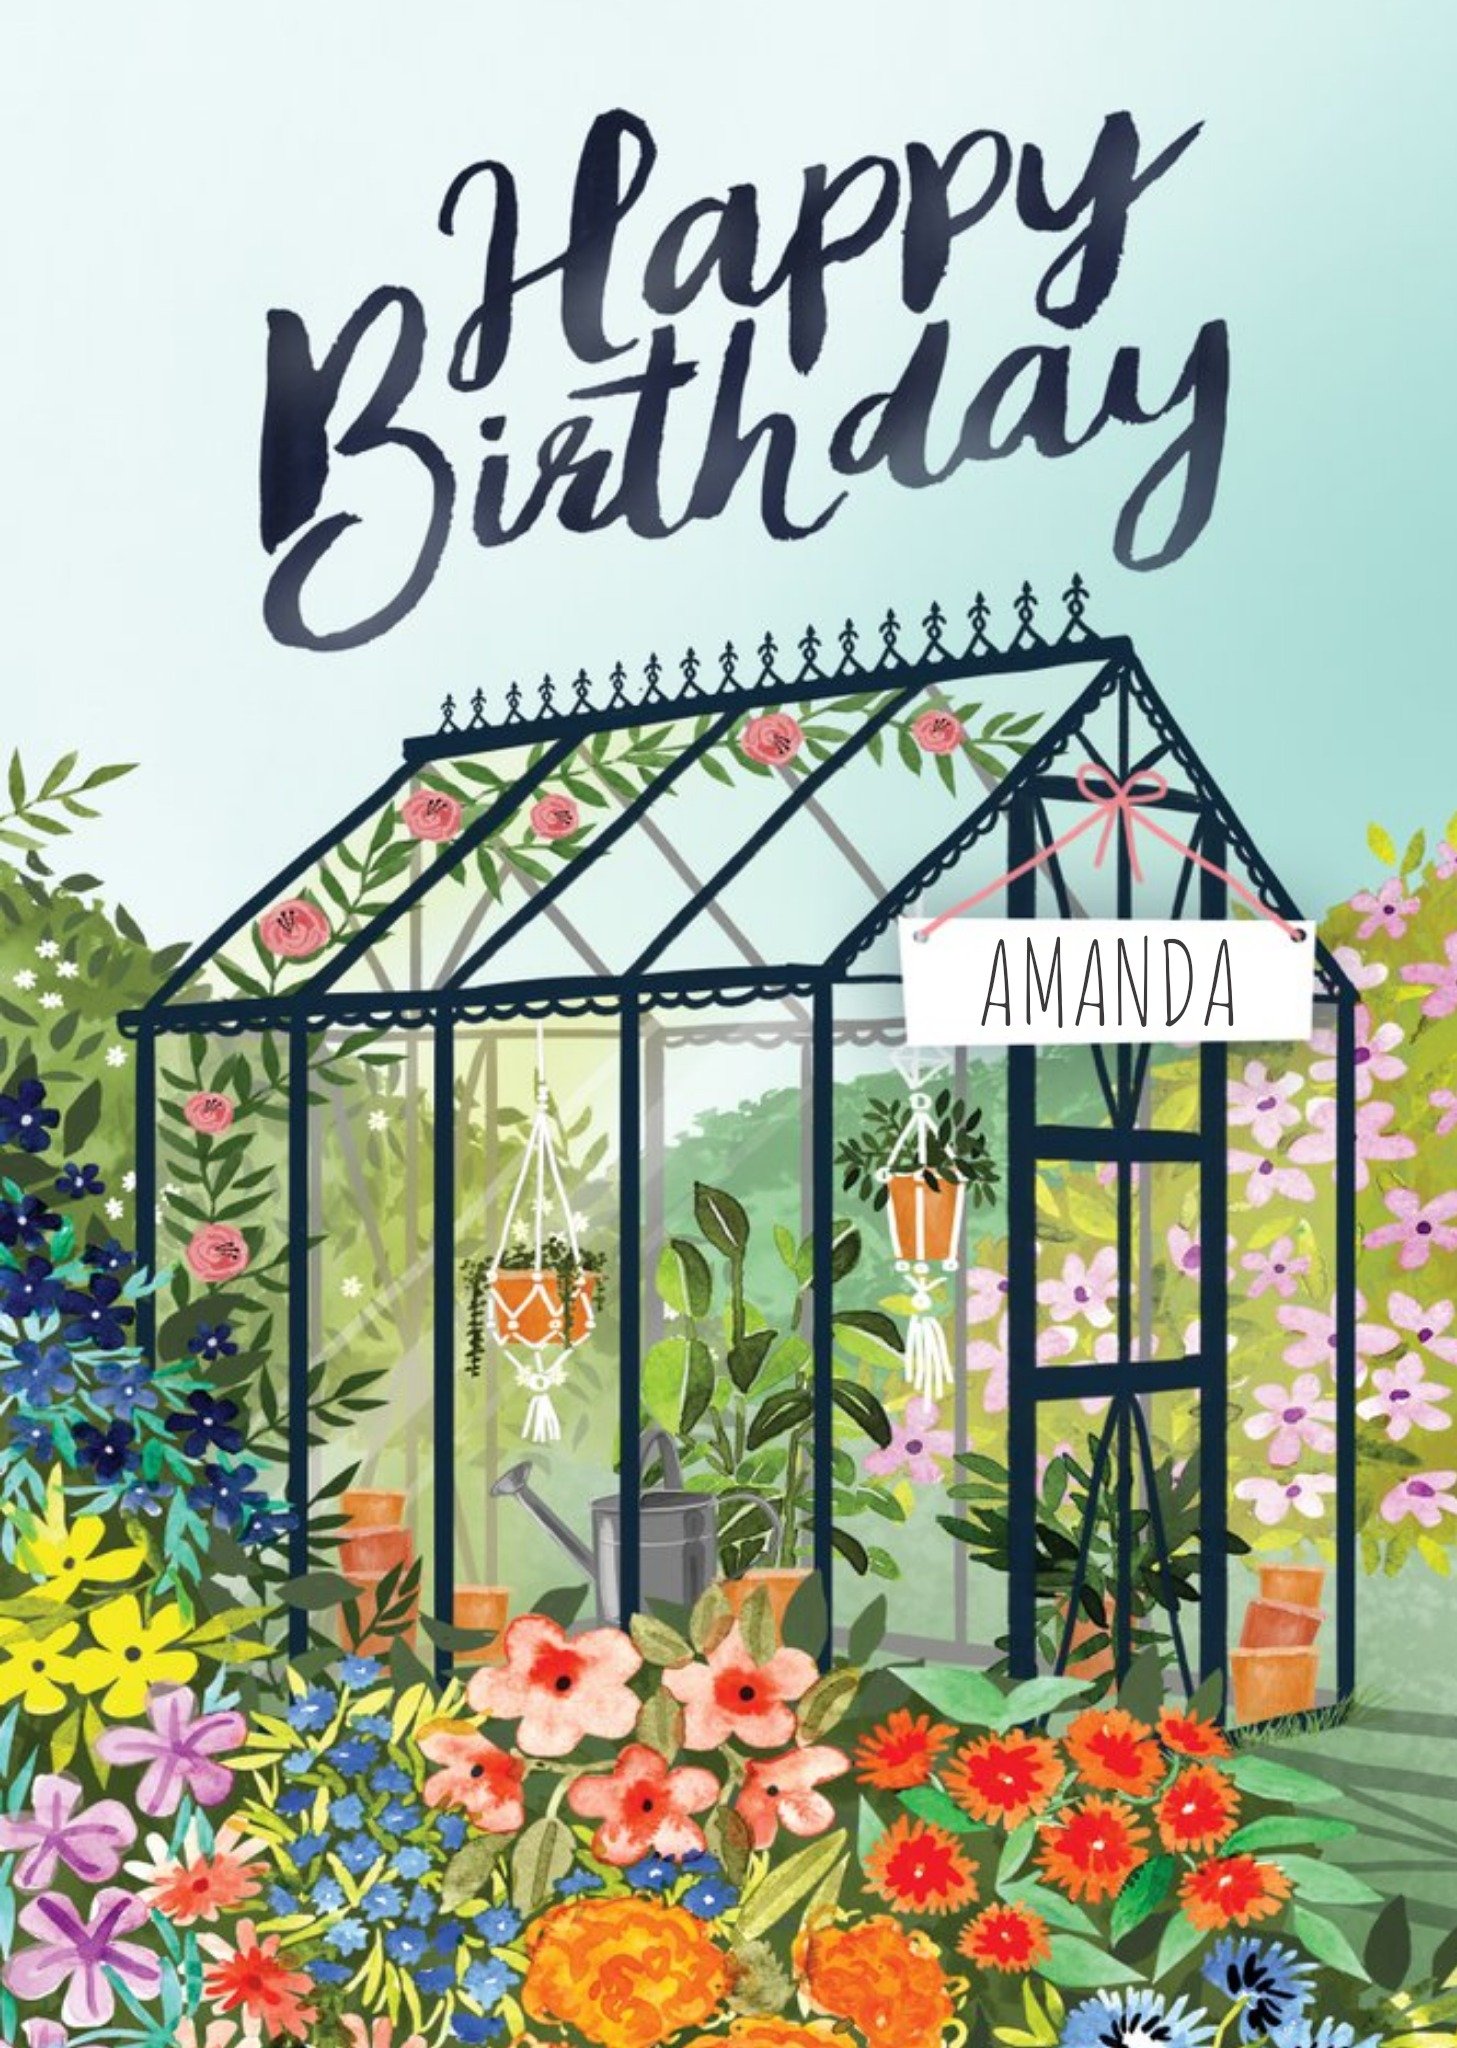 Moonpig Beautiful Botanical Hand-Painted Greenhouse Illustration Happy Birthday Card, Large